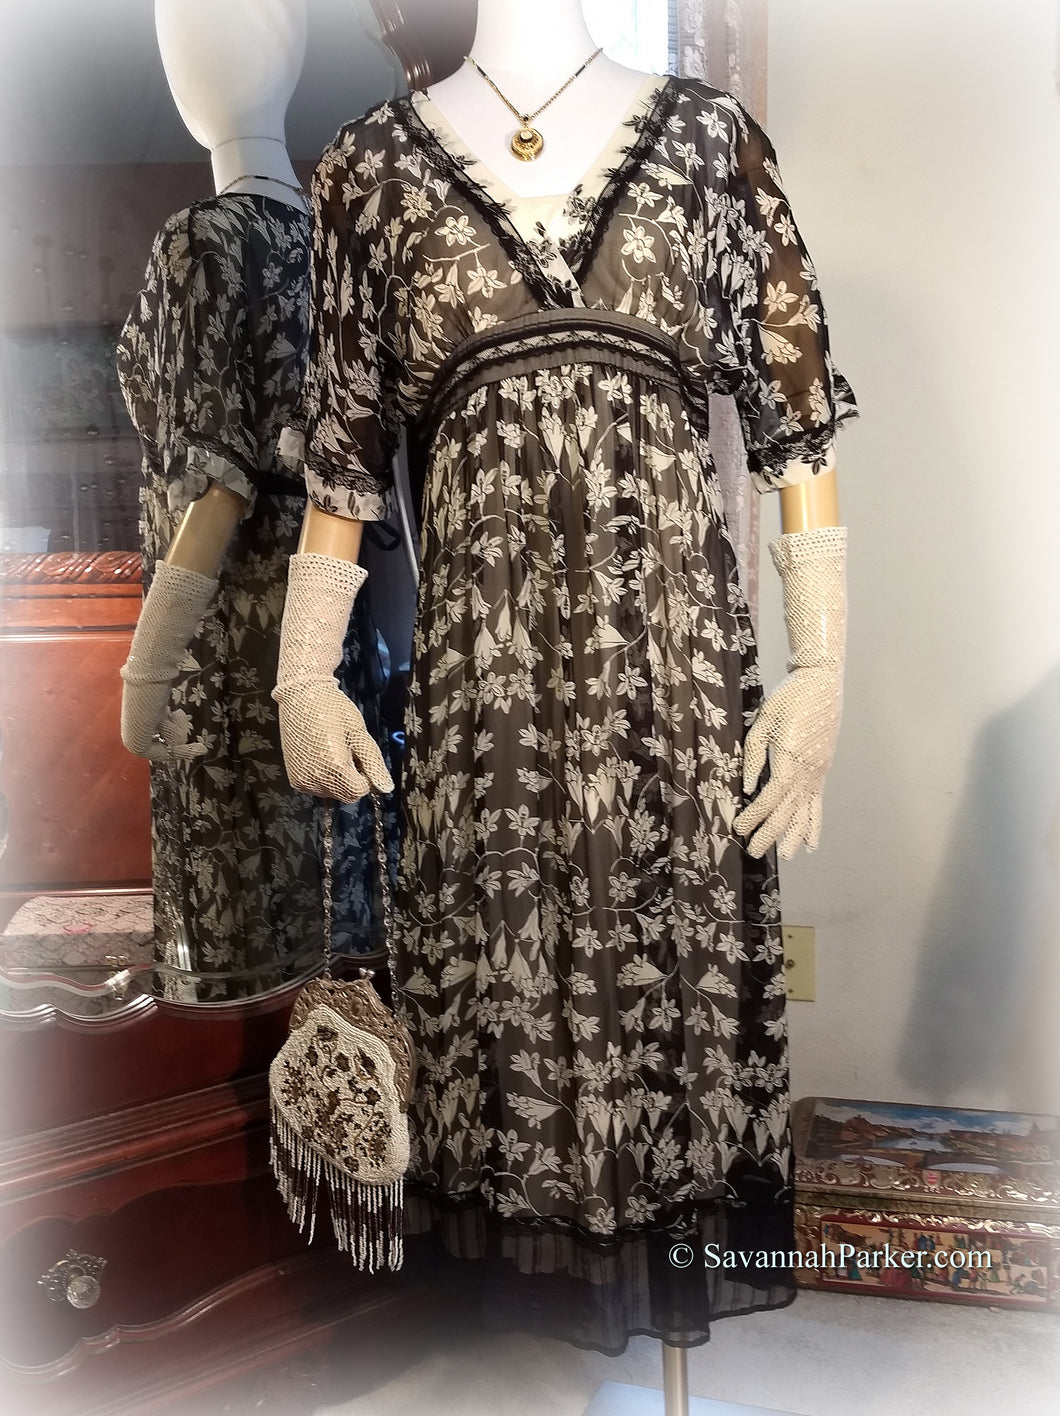 SOLD Fantastic Vintage Silk Chiffon 1990s does 1910s-20s Dress - Titanic Style - Gorgeous Black/Ivory Silk Print - Black Lace Trim - Full Slip